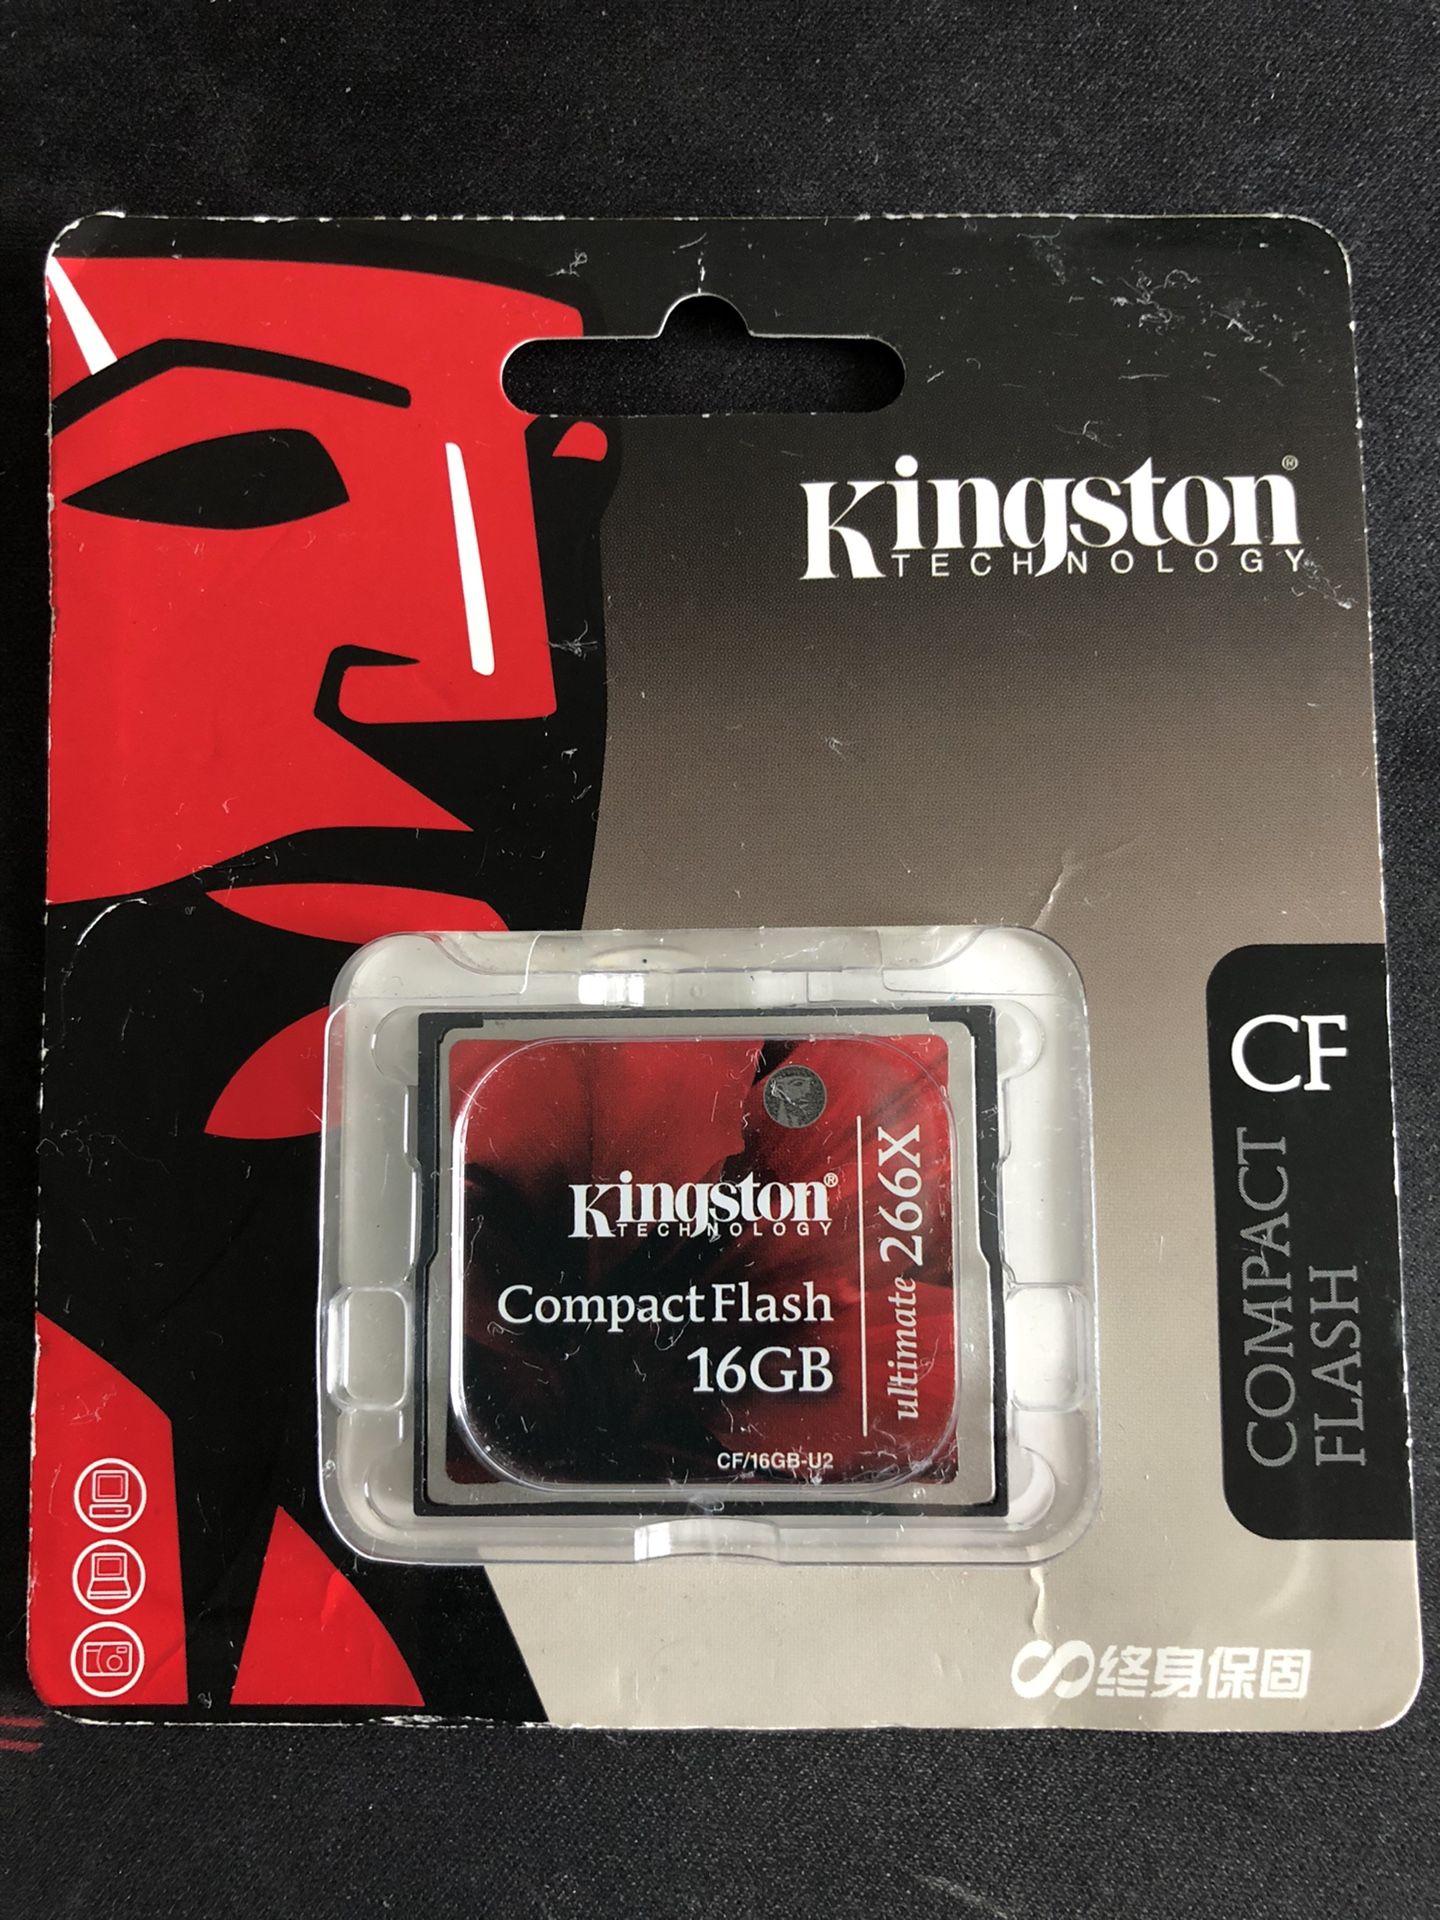 Kingston compact flash 16gb